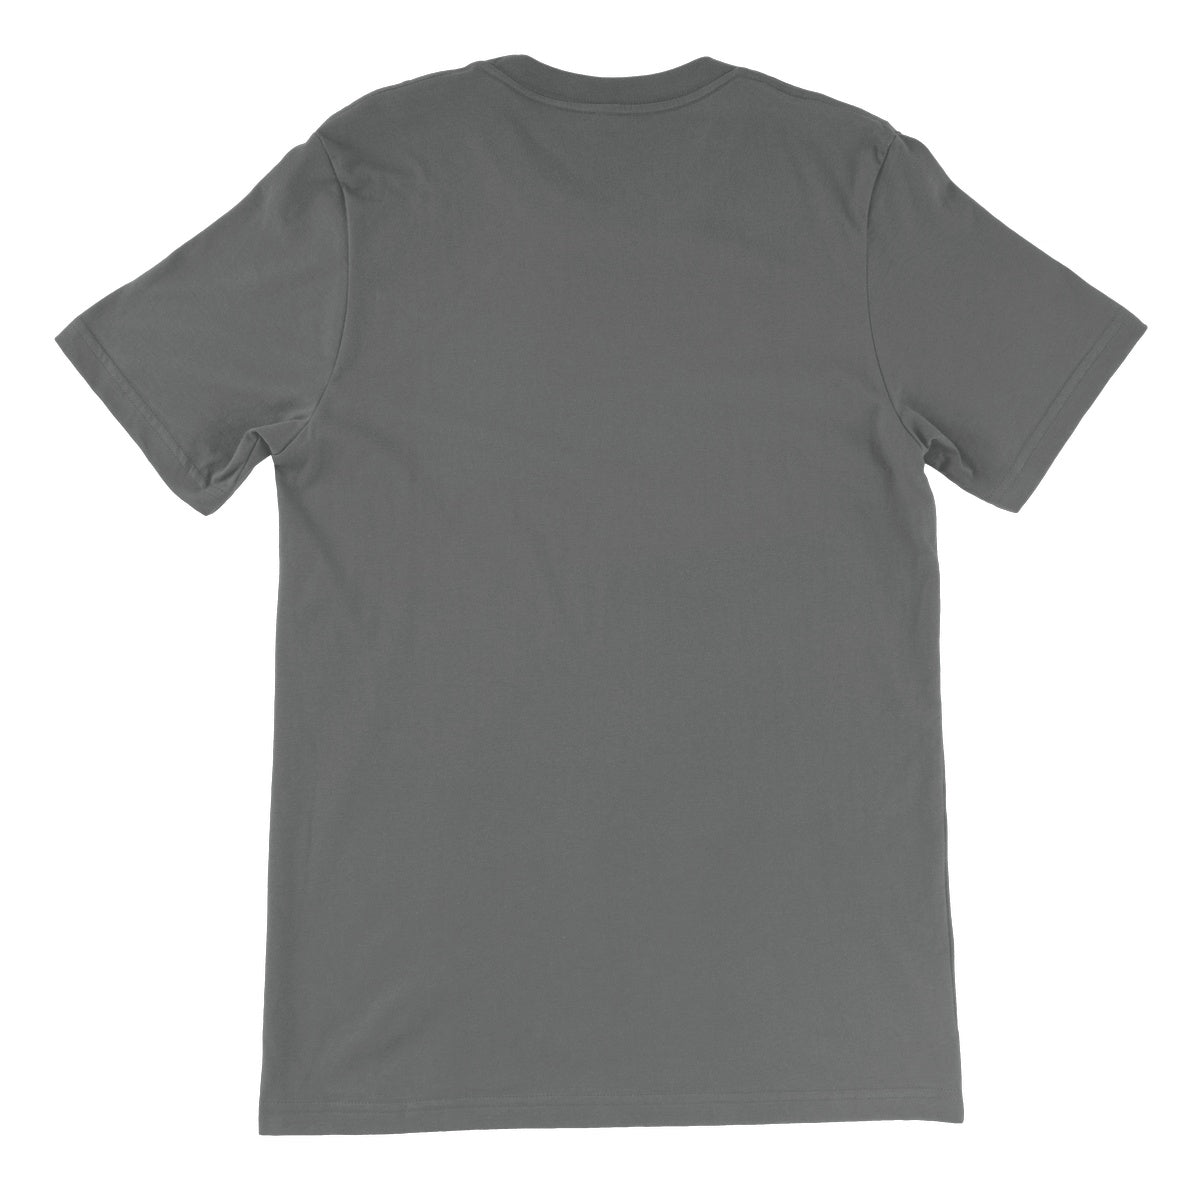 AQUA HMP2 - 03 -Dory - Unisex Fine Jersey T-Shirt